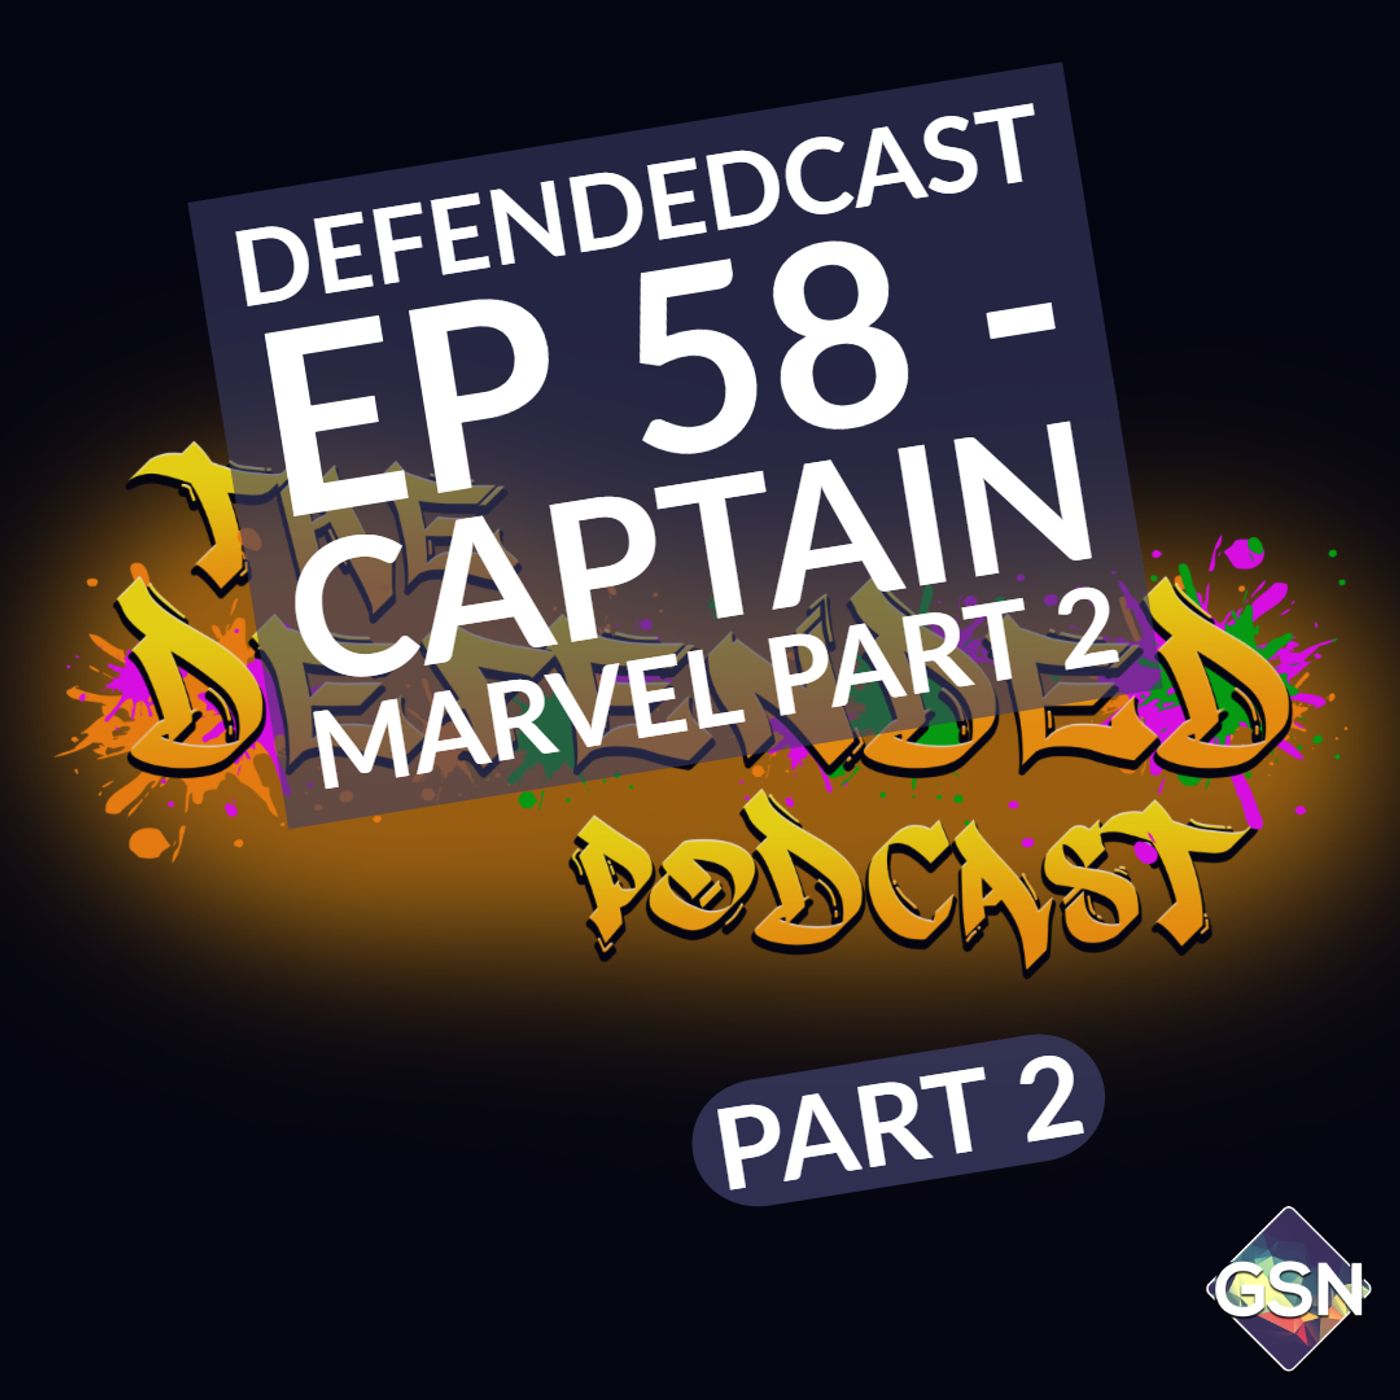 Defendedcast Ep 58 - Captain Marvel Part 2